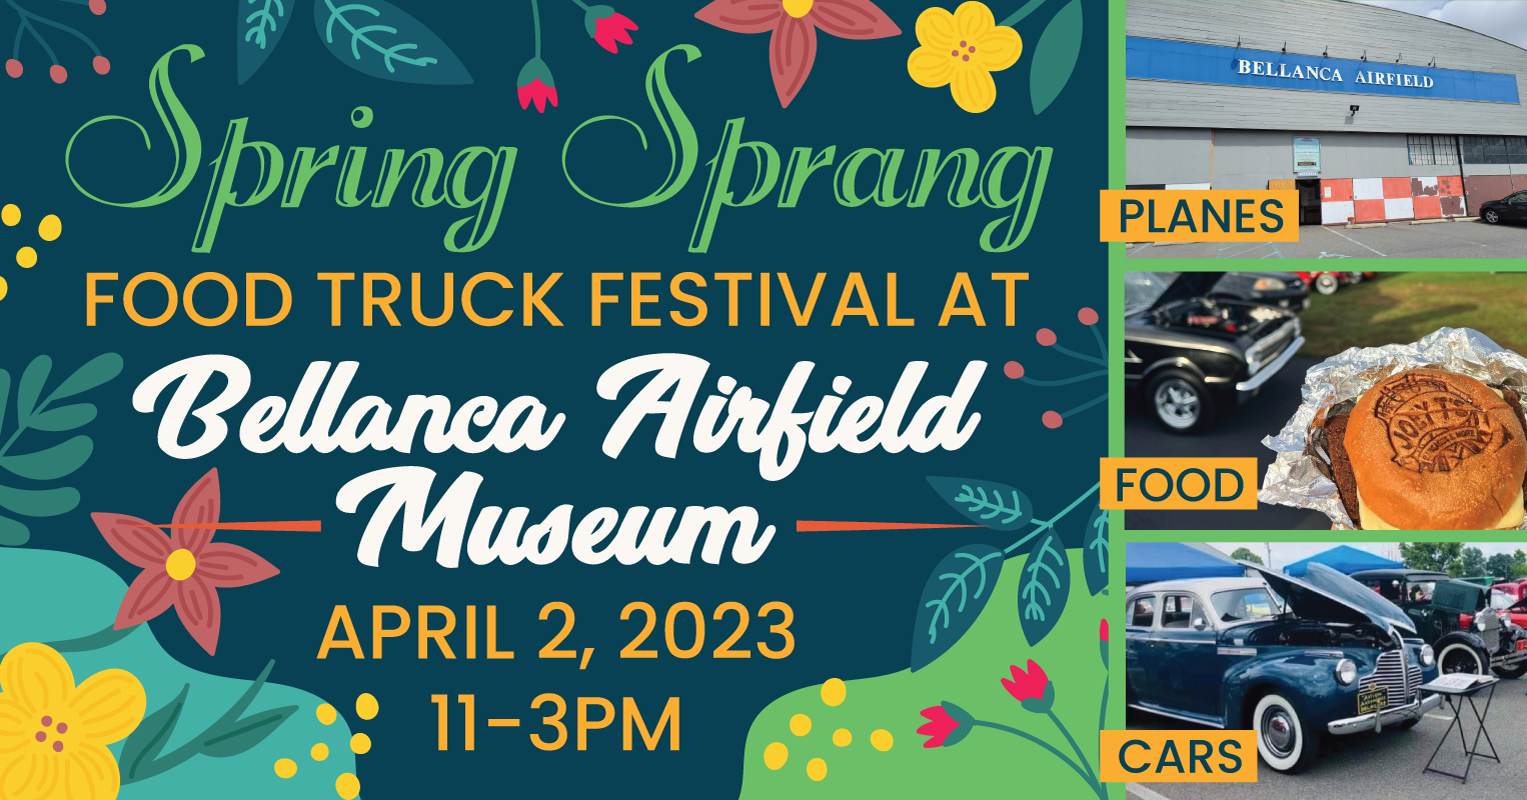 Spring Sprang Food Truck Festival at Bellanca Airfield Museum